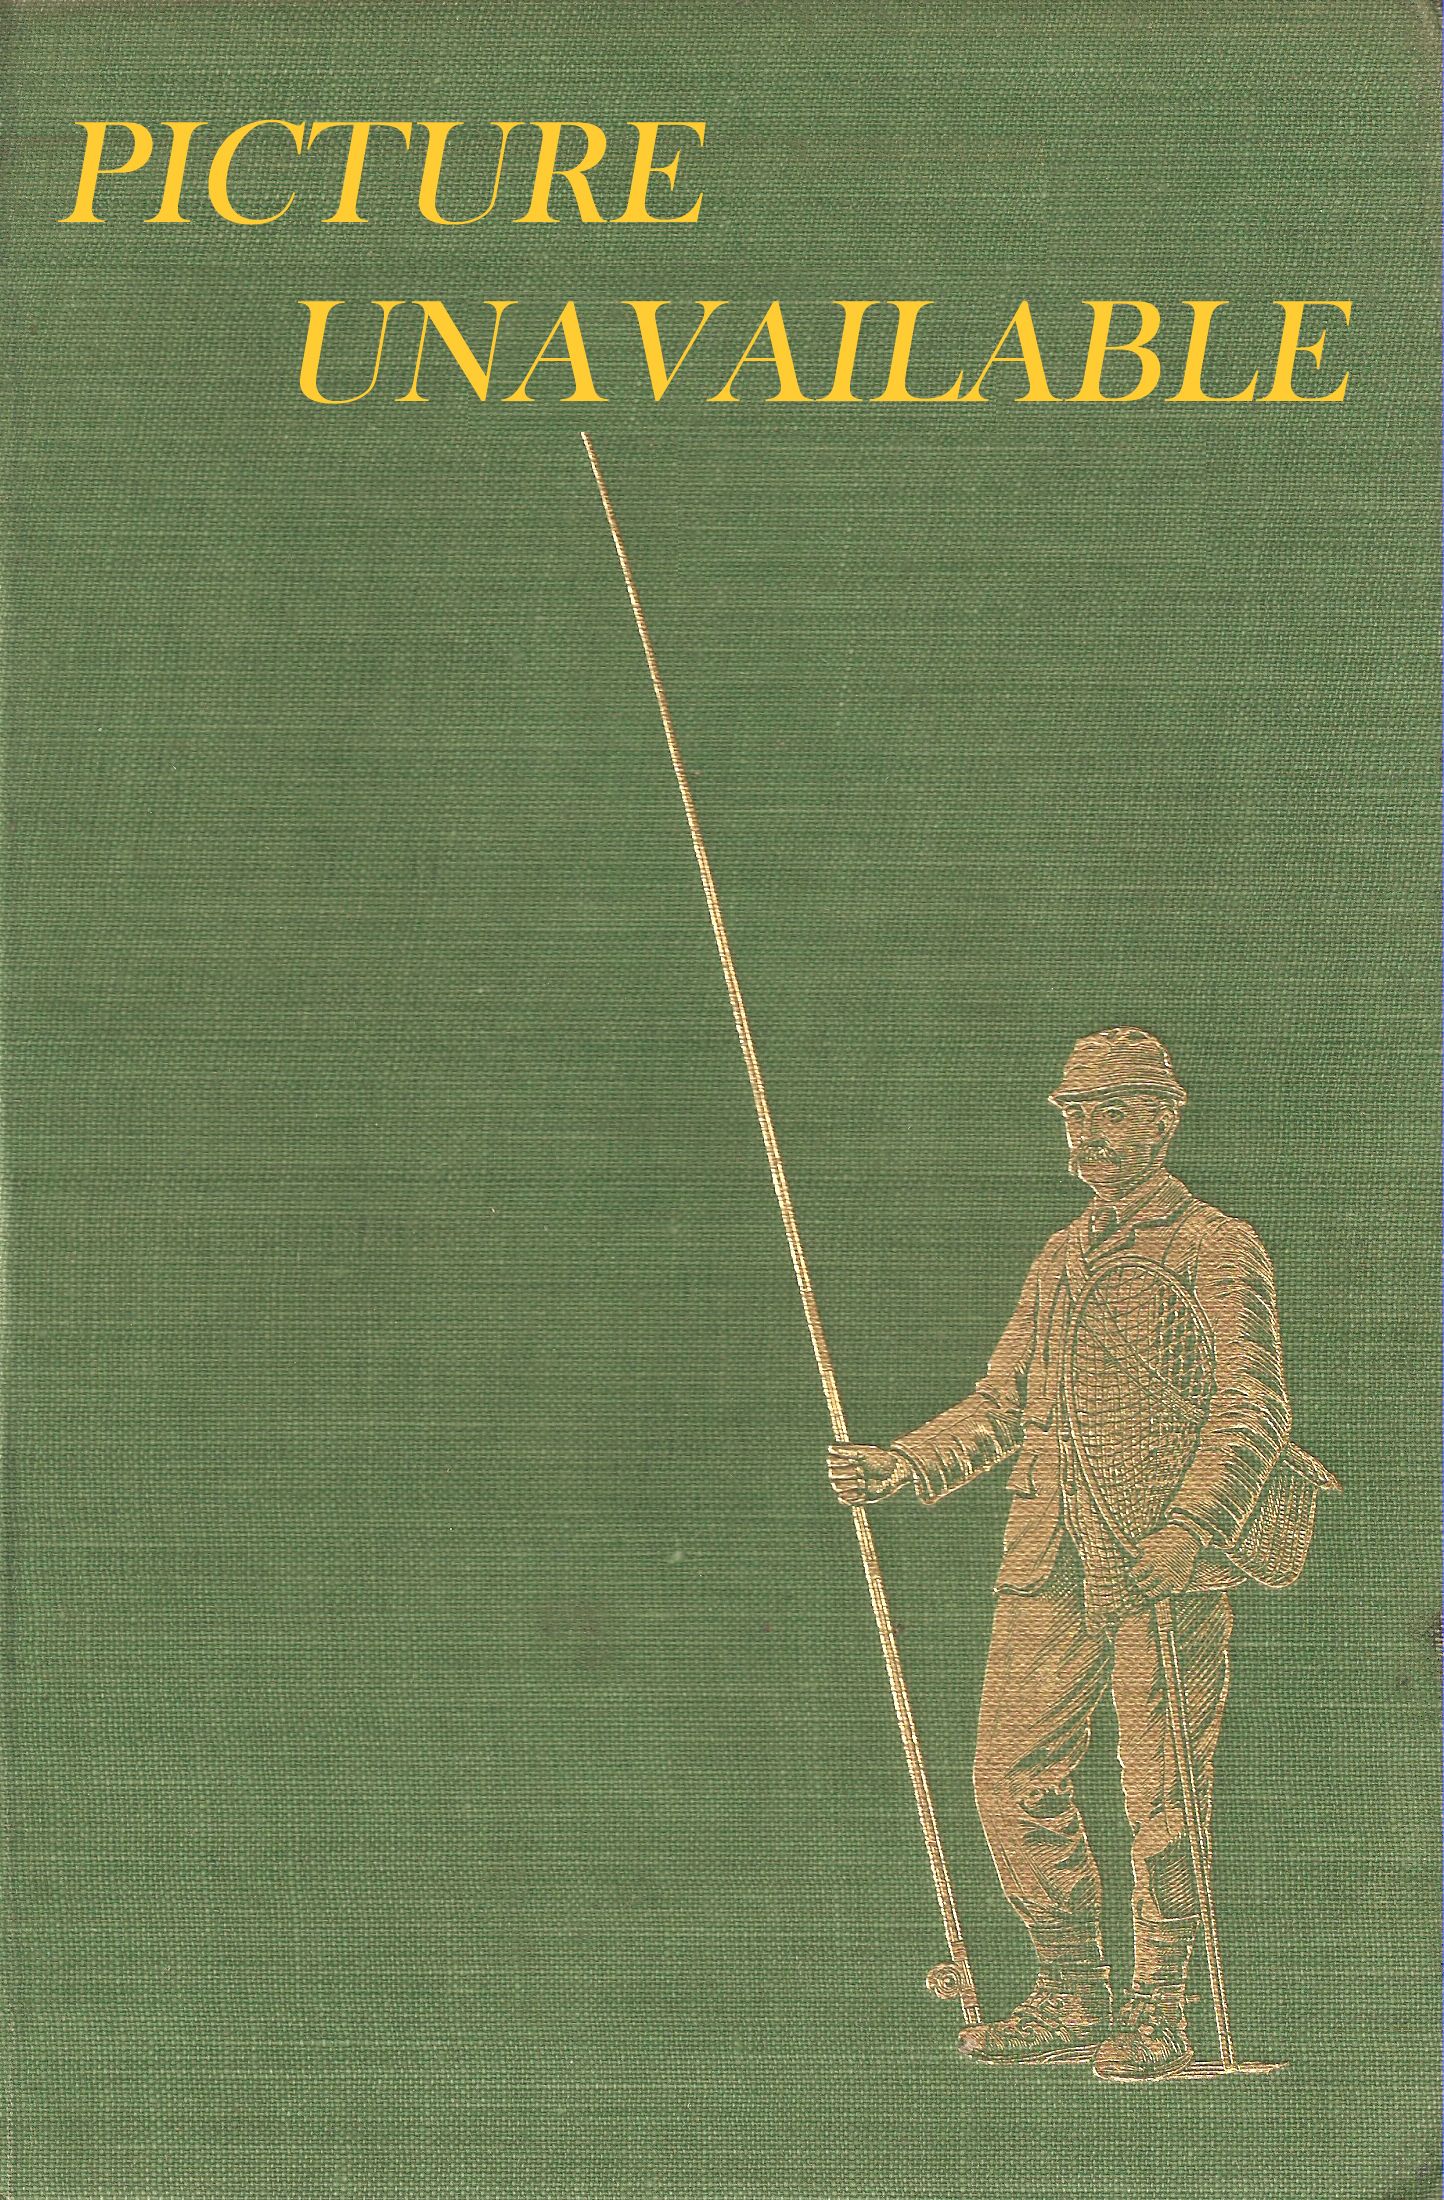 THE FISHERMAN'S HANDBOOK. By Edgar S. Shrubsole.